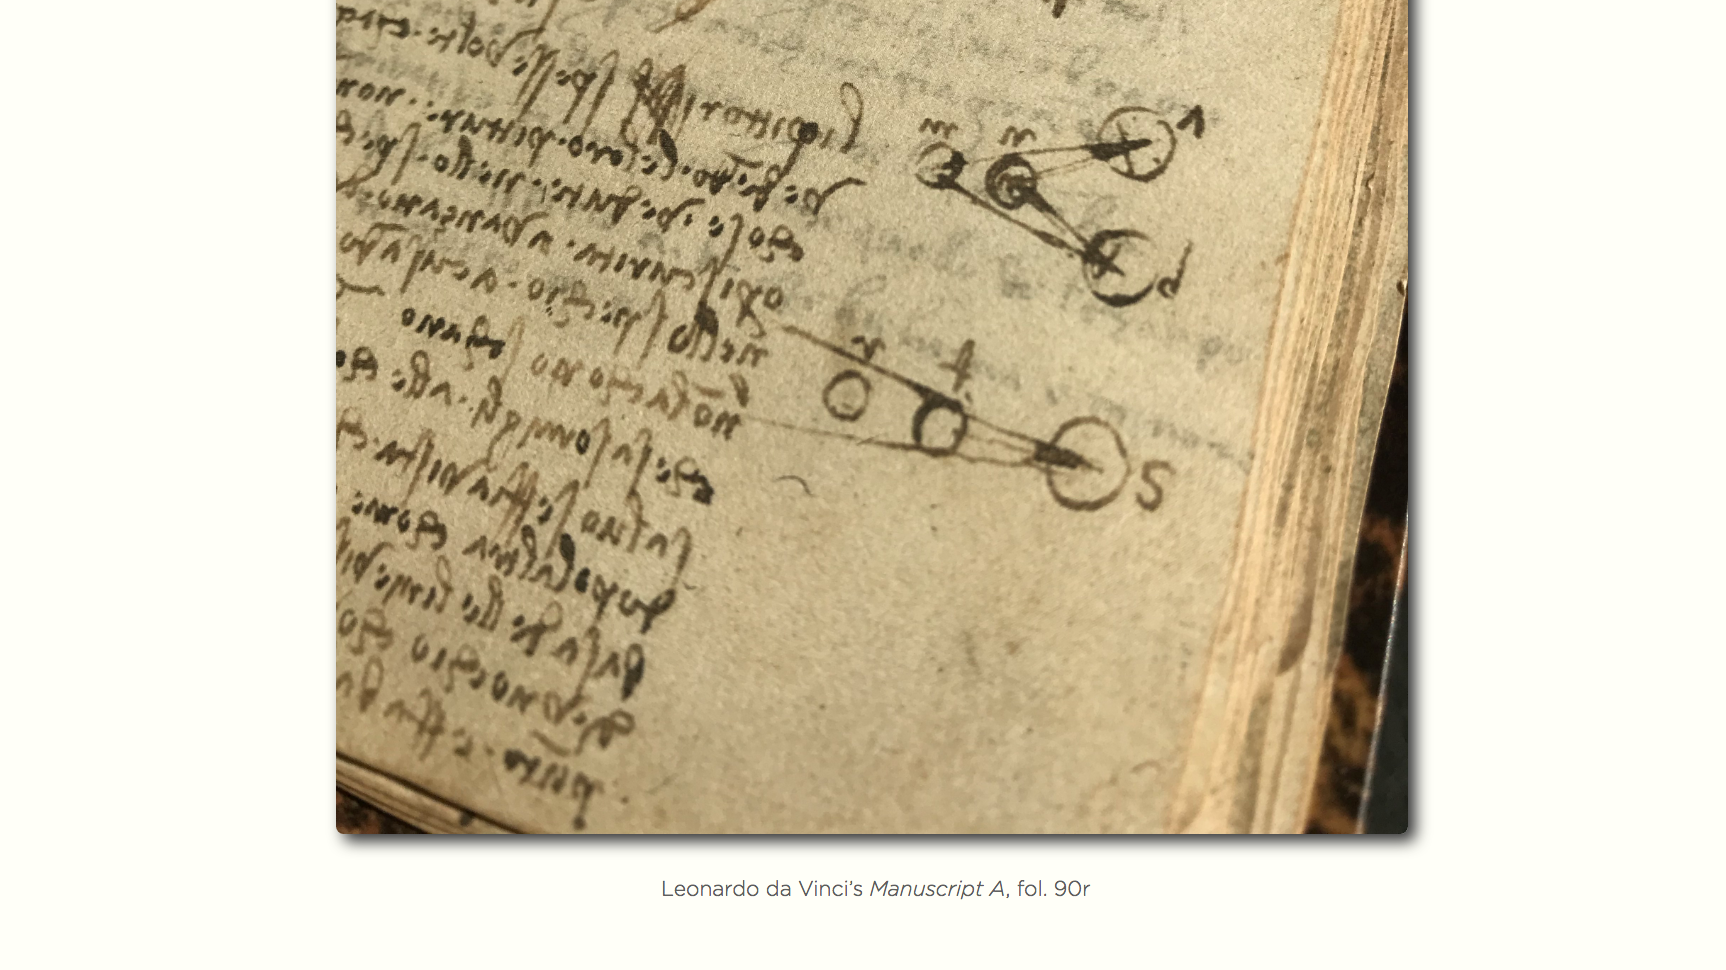 "Image taken from Francesca Borgo’s post on Leonardo da Vinci’s Manuscript A for our Book of the Week page"